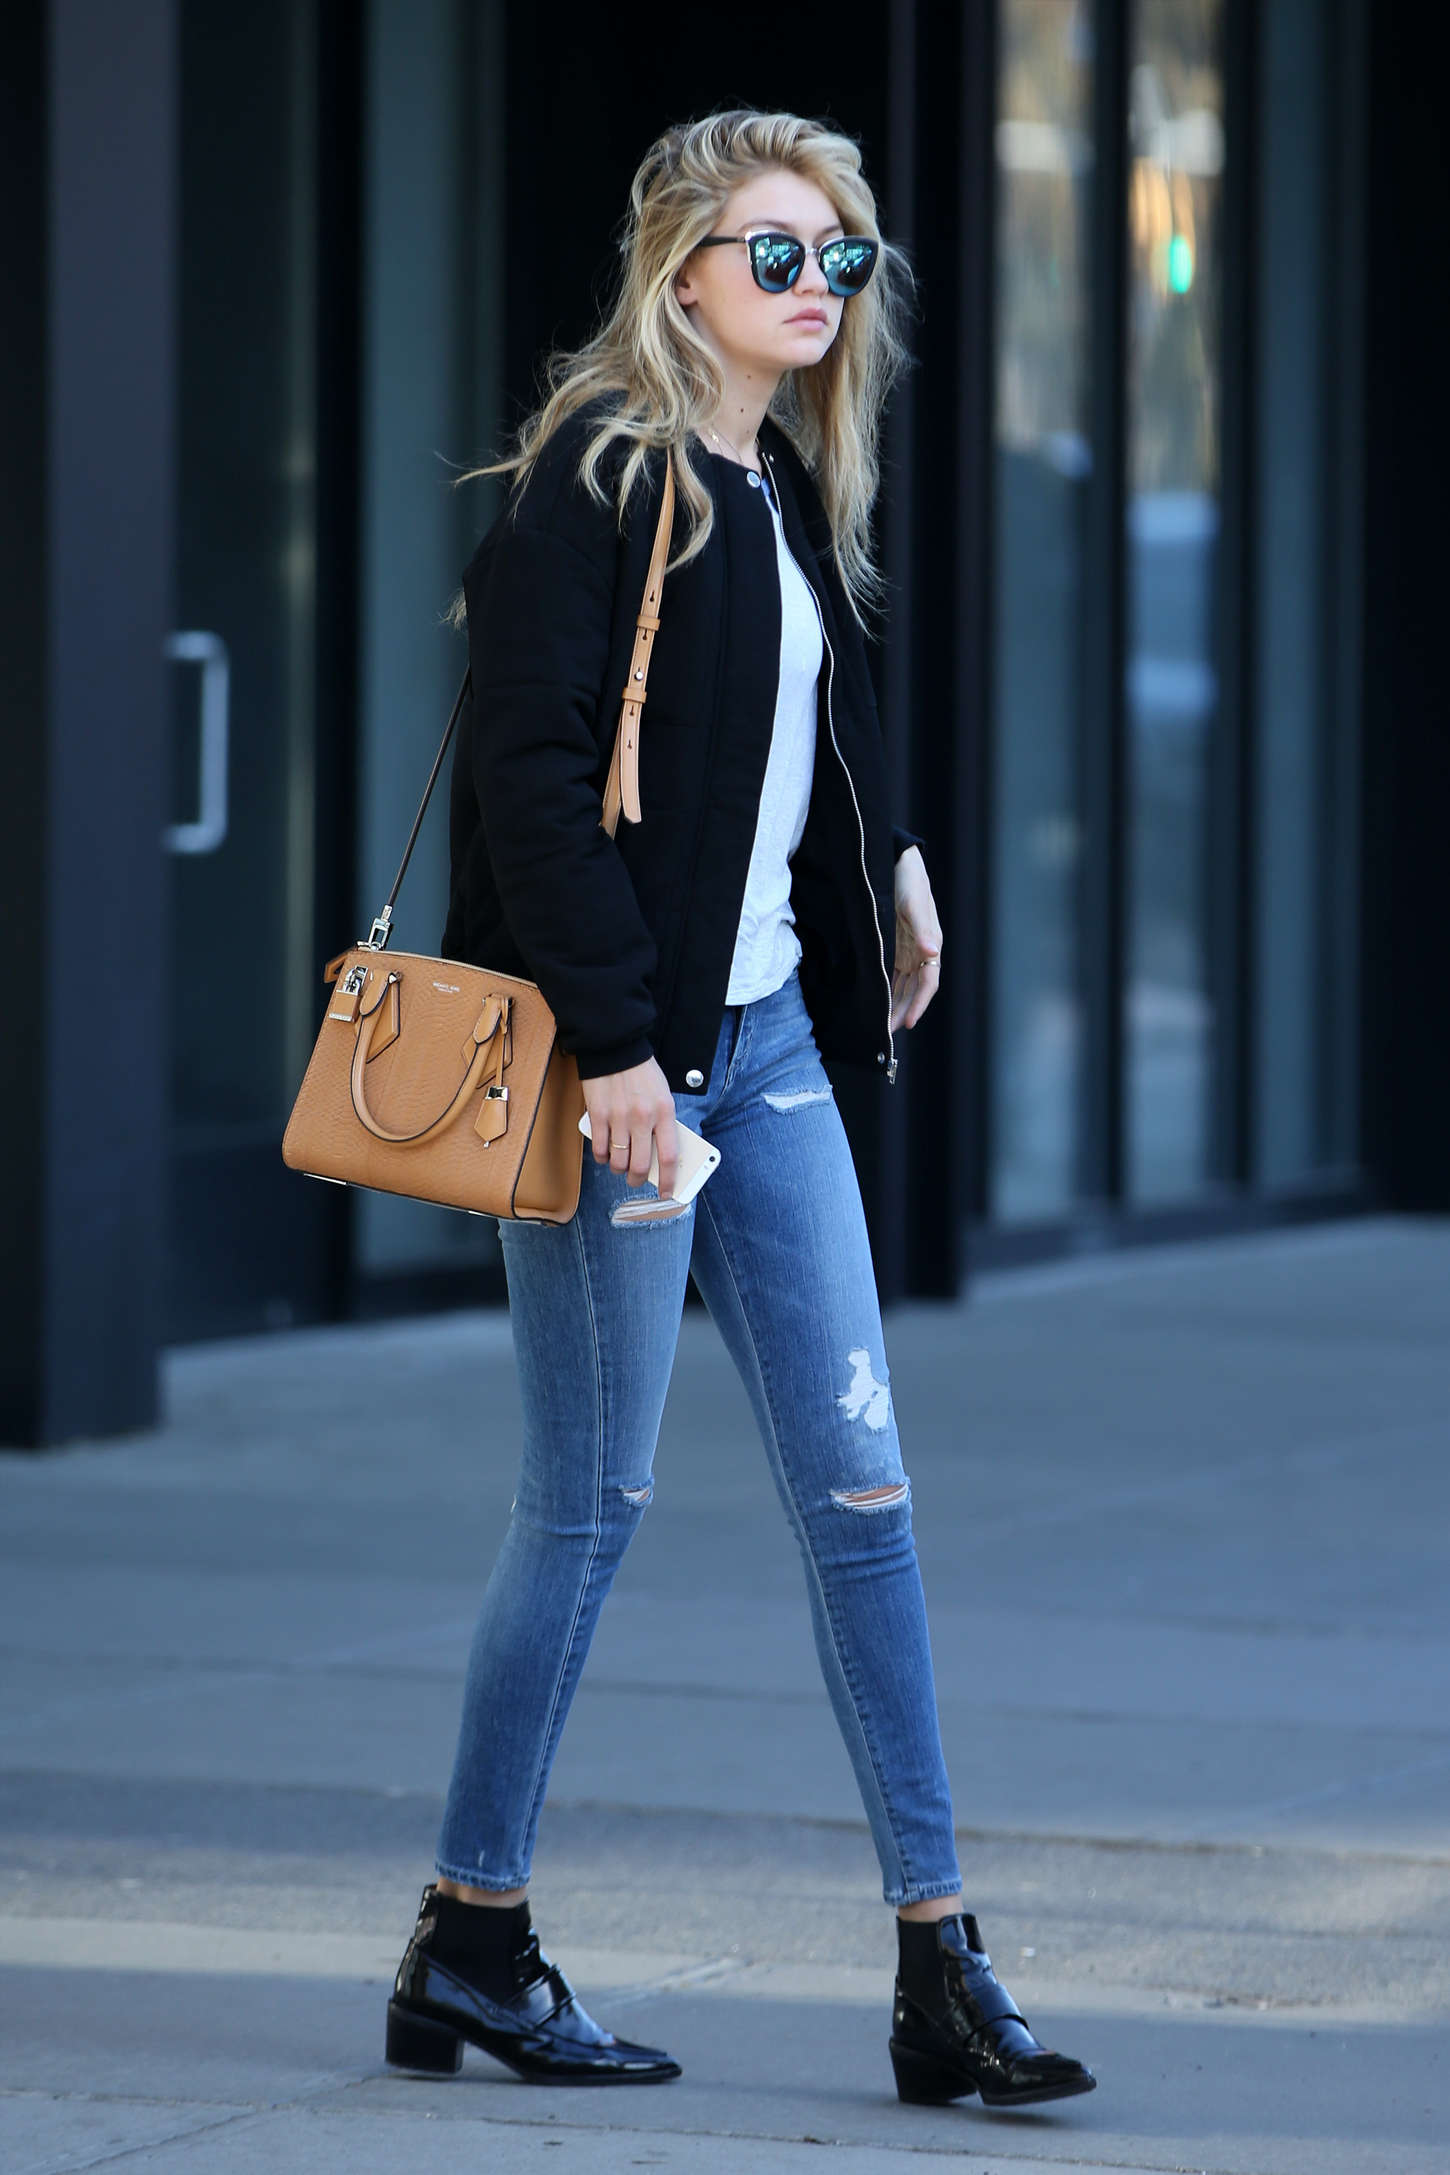 Gigi-Hadid-in-Tight-Jeans--02.jpg